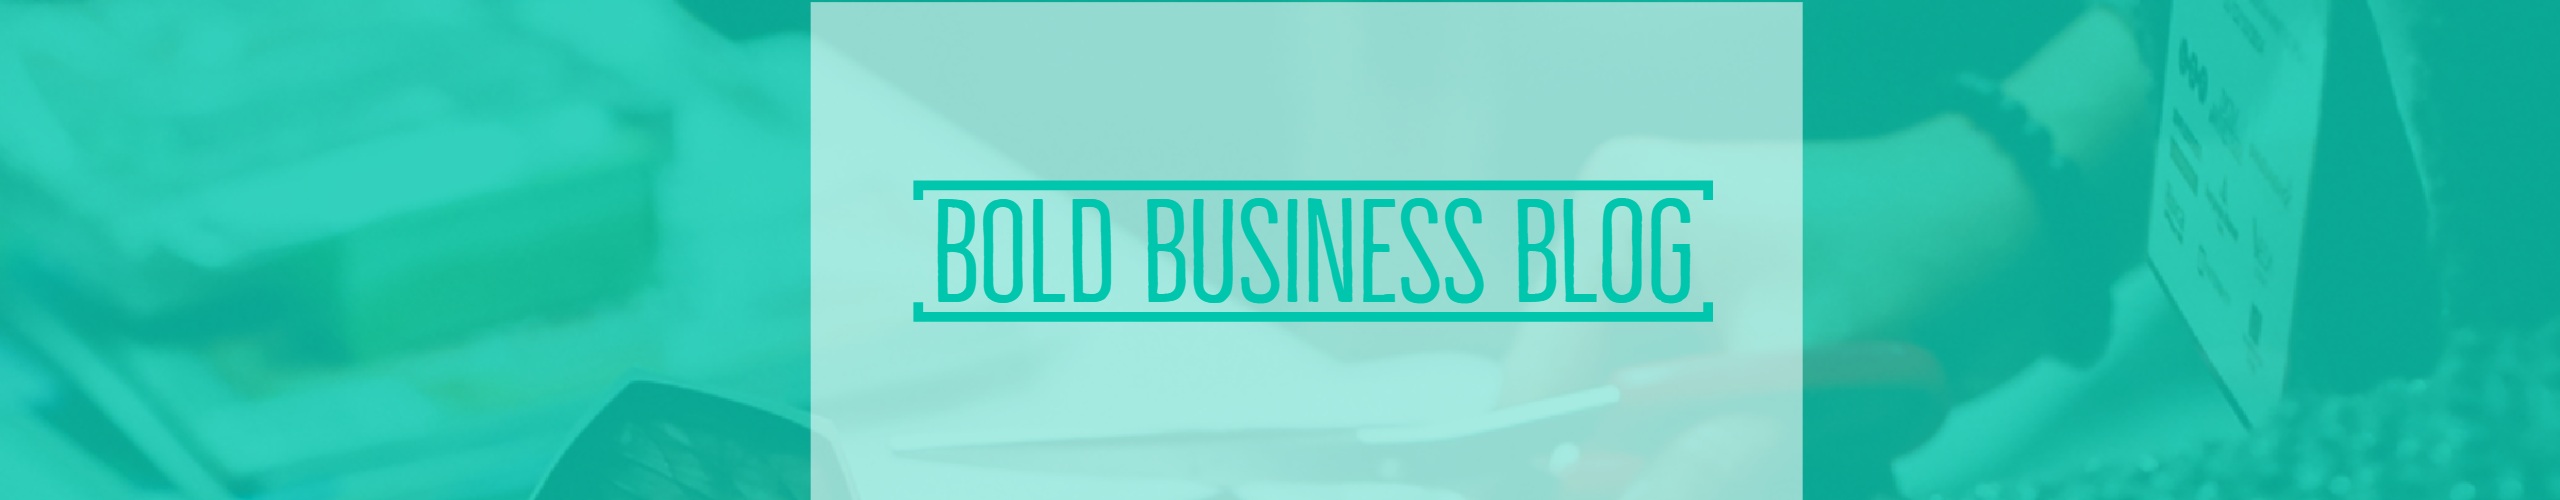 BOLD-Business-Blog